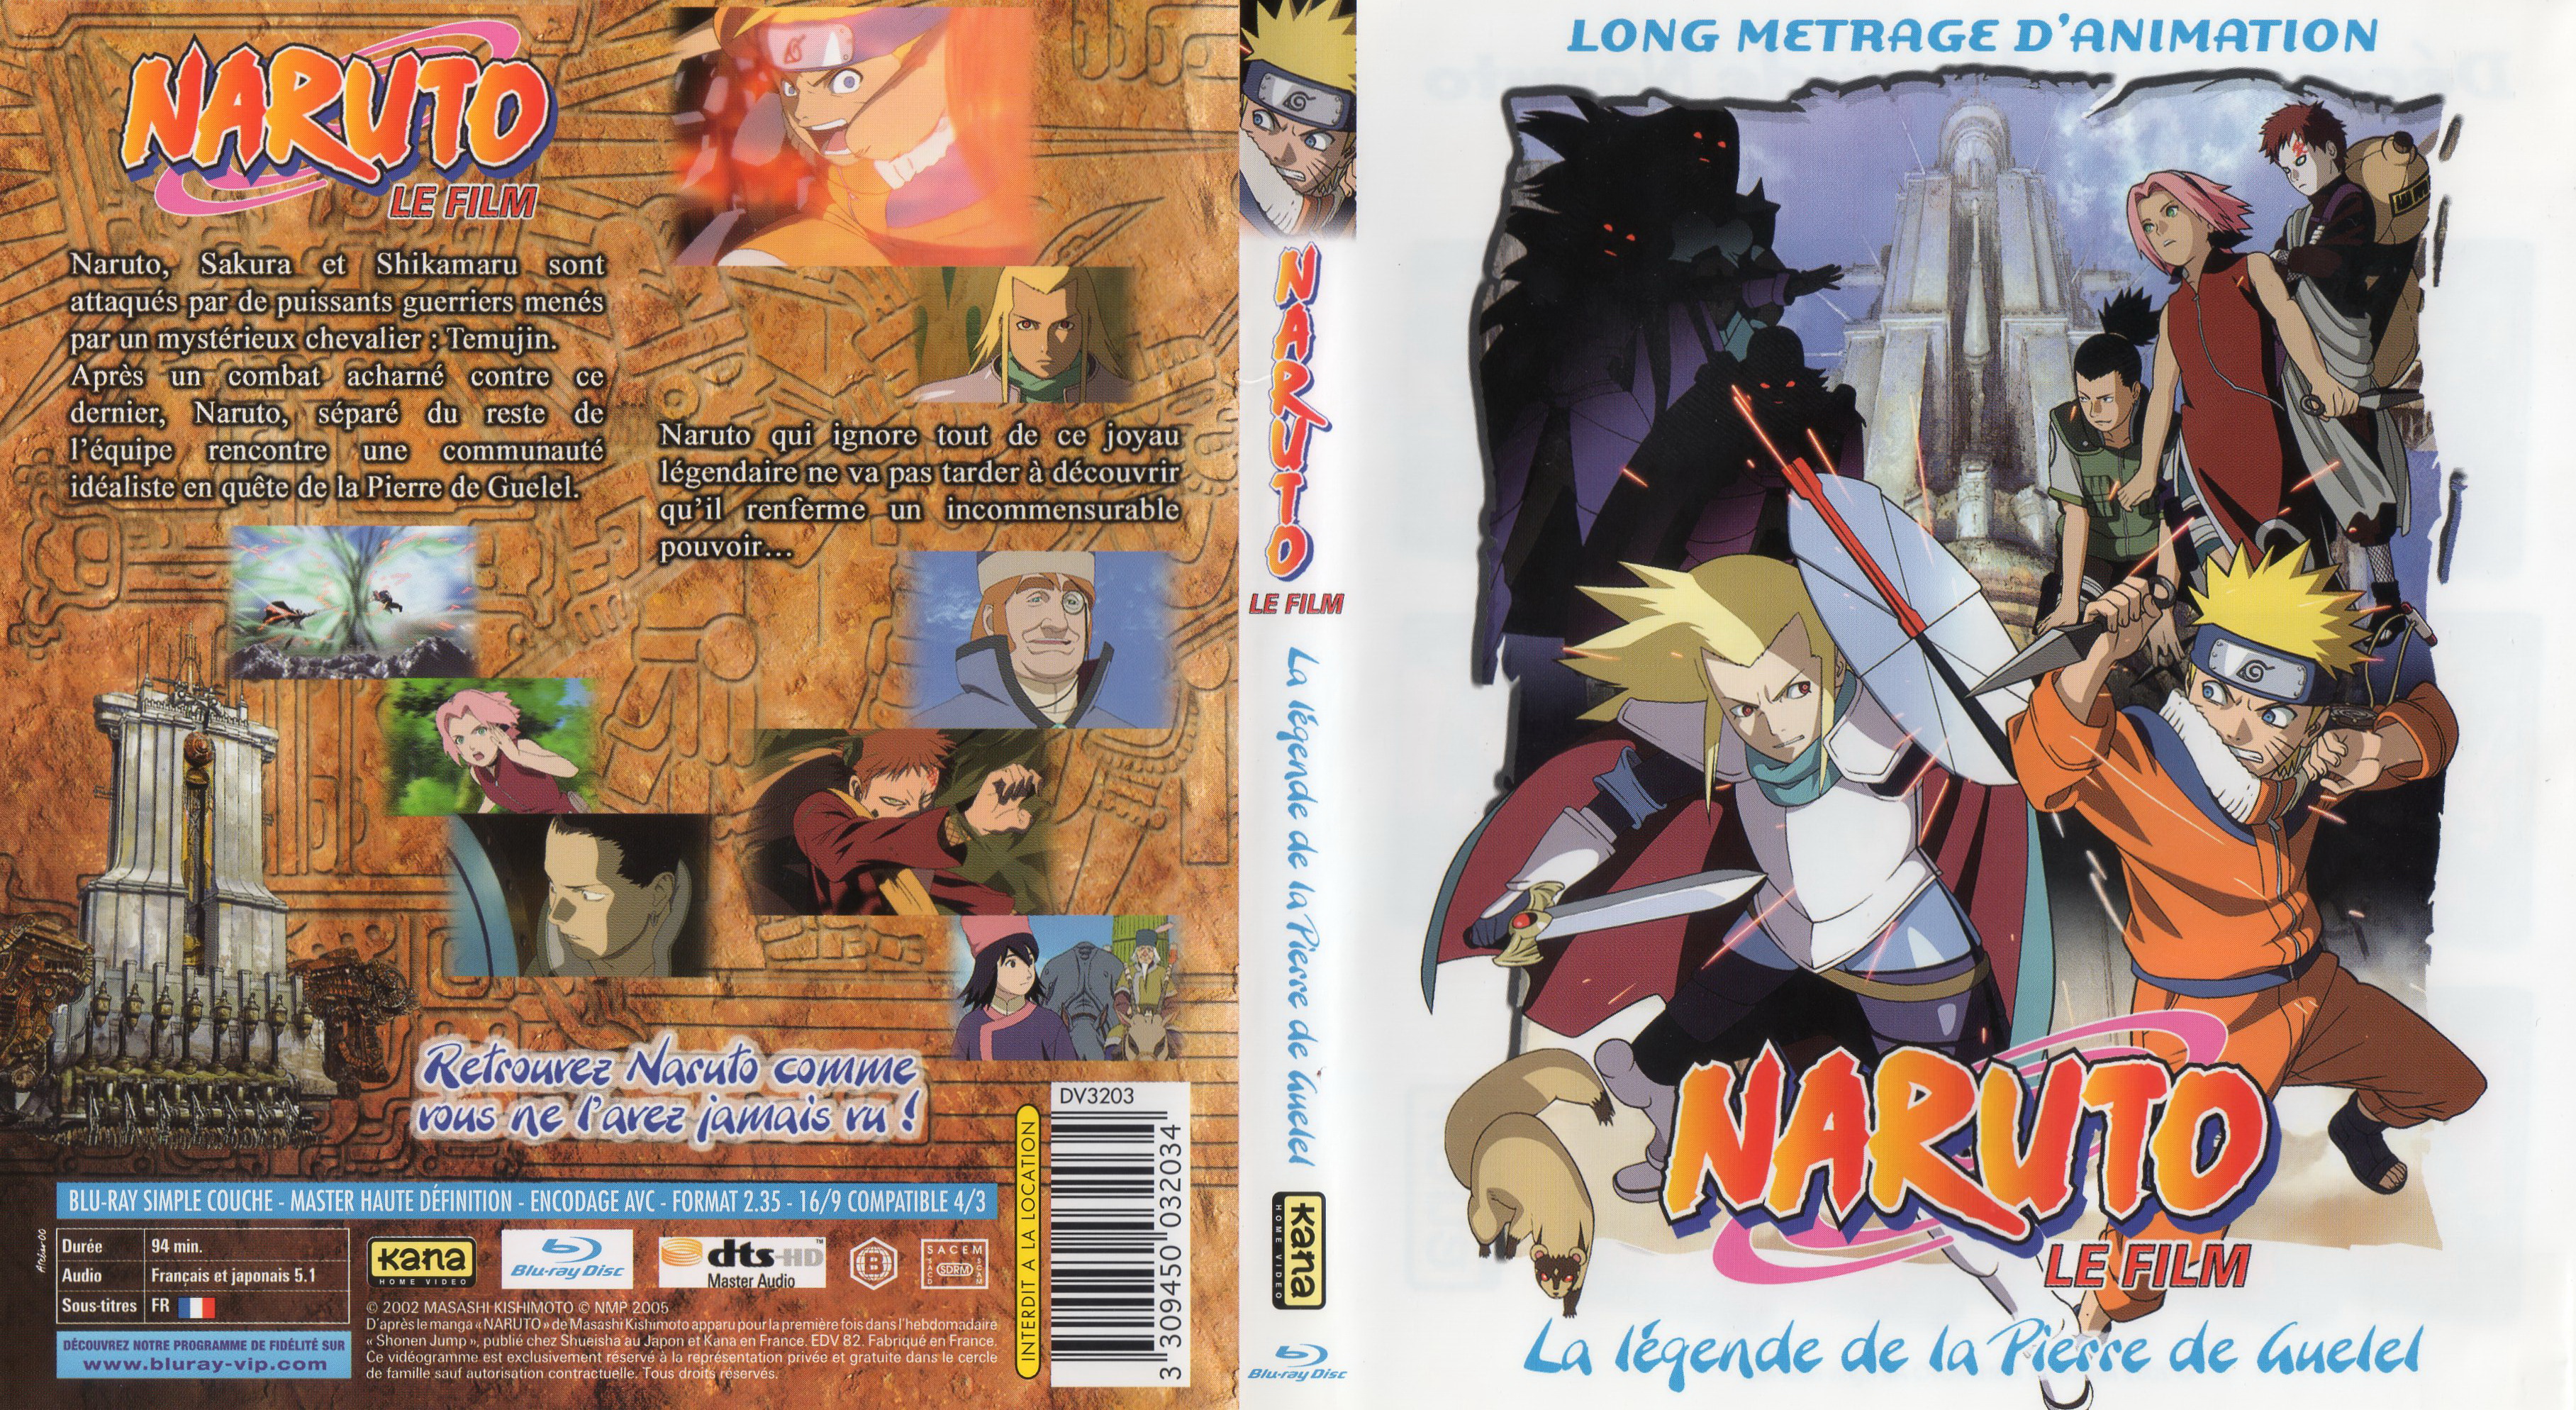 Jaquette DVD Naruto le film - La lgende de la pierre de Guelel (BLU-RAY)